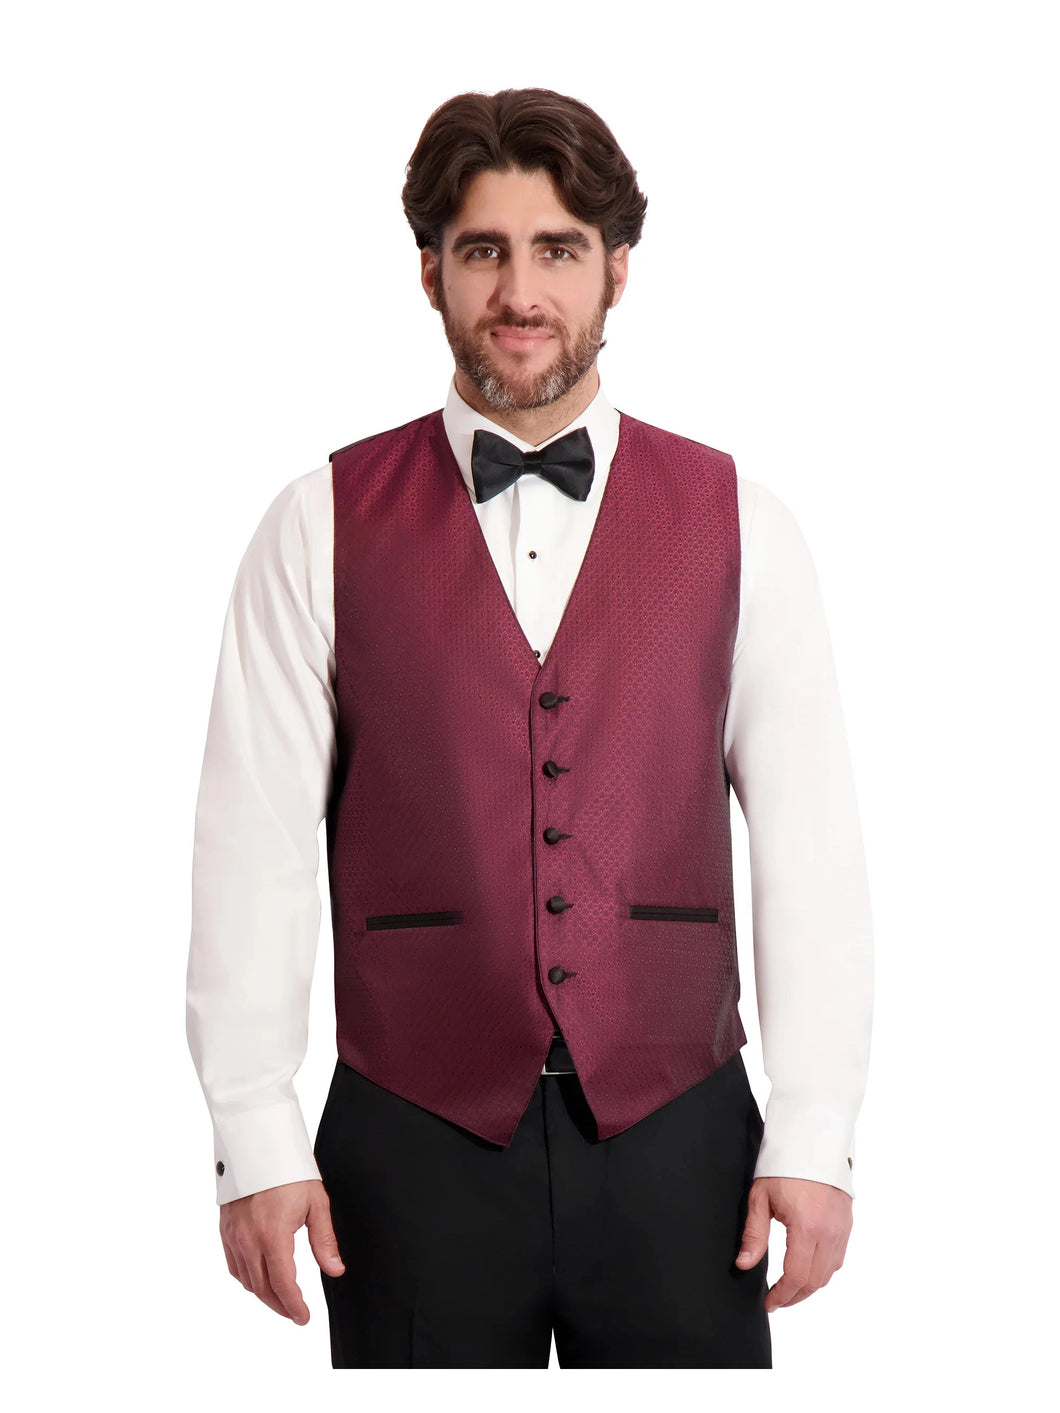 Jacquard Tuxedo Vest (#146V) - Burgundy and Tie Set